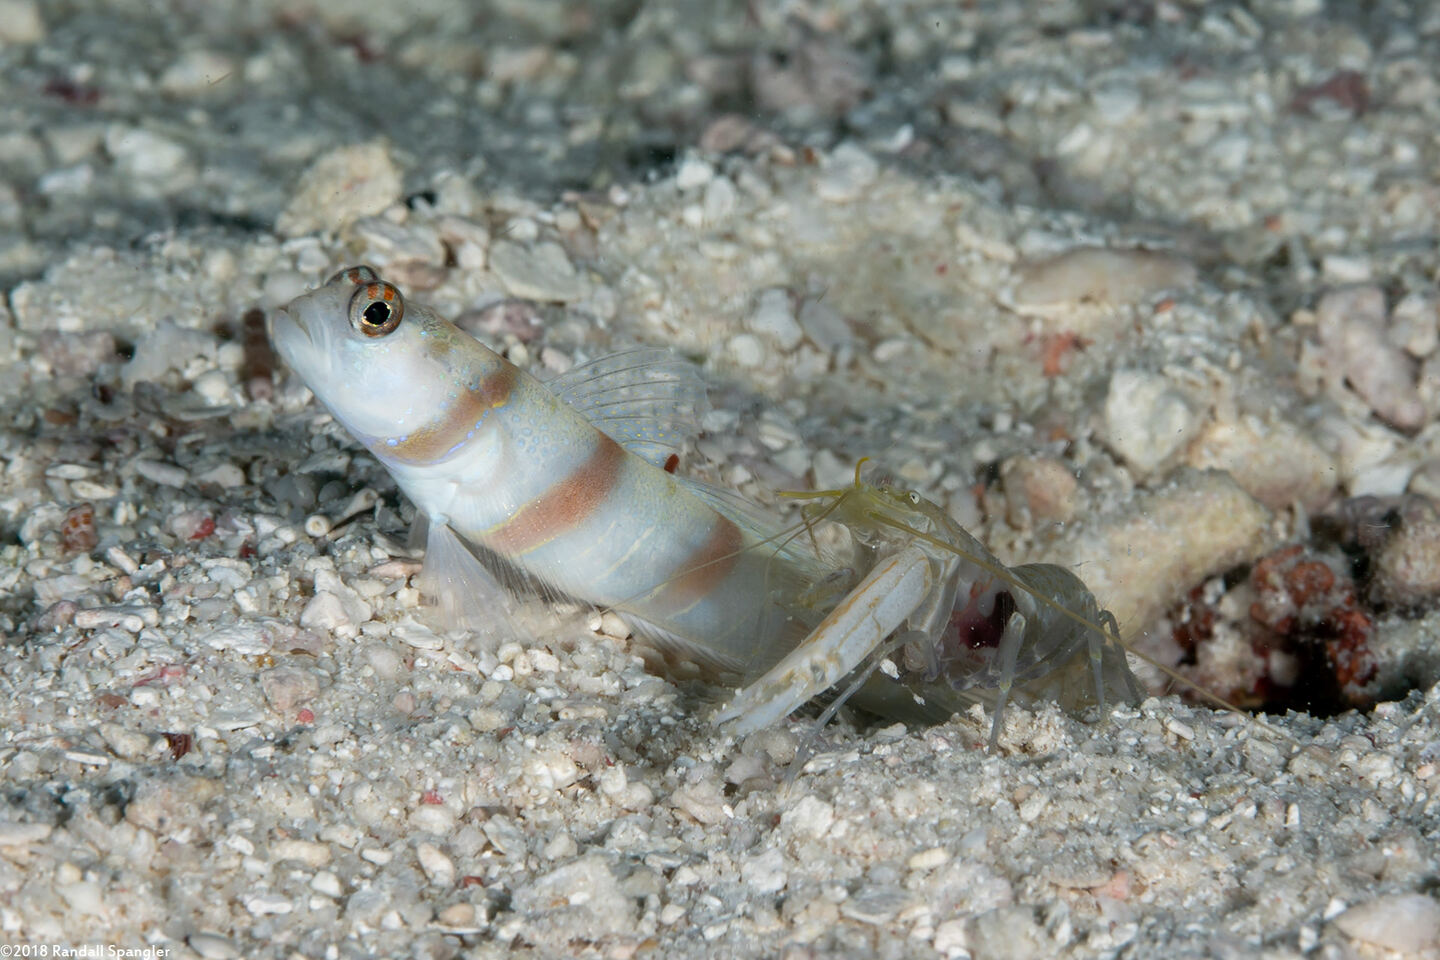 Alpheus djeddensis (Djedda Alpheus); With shrimp companion